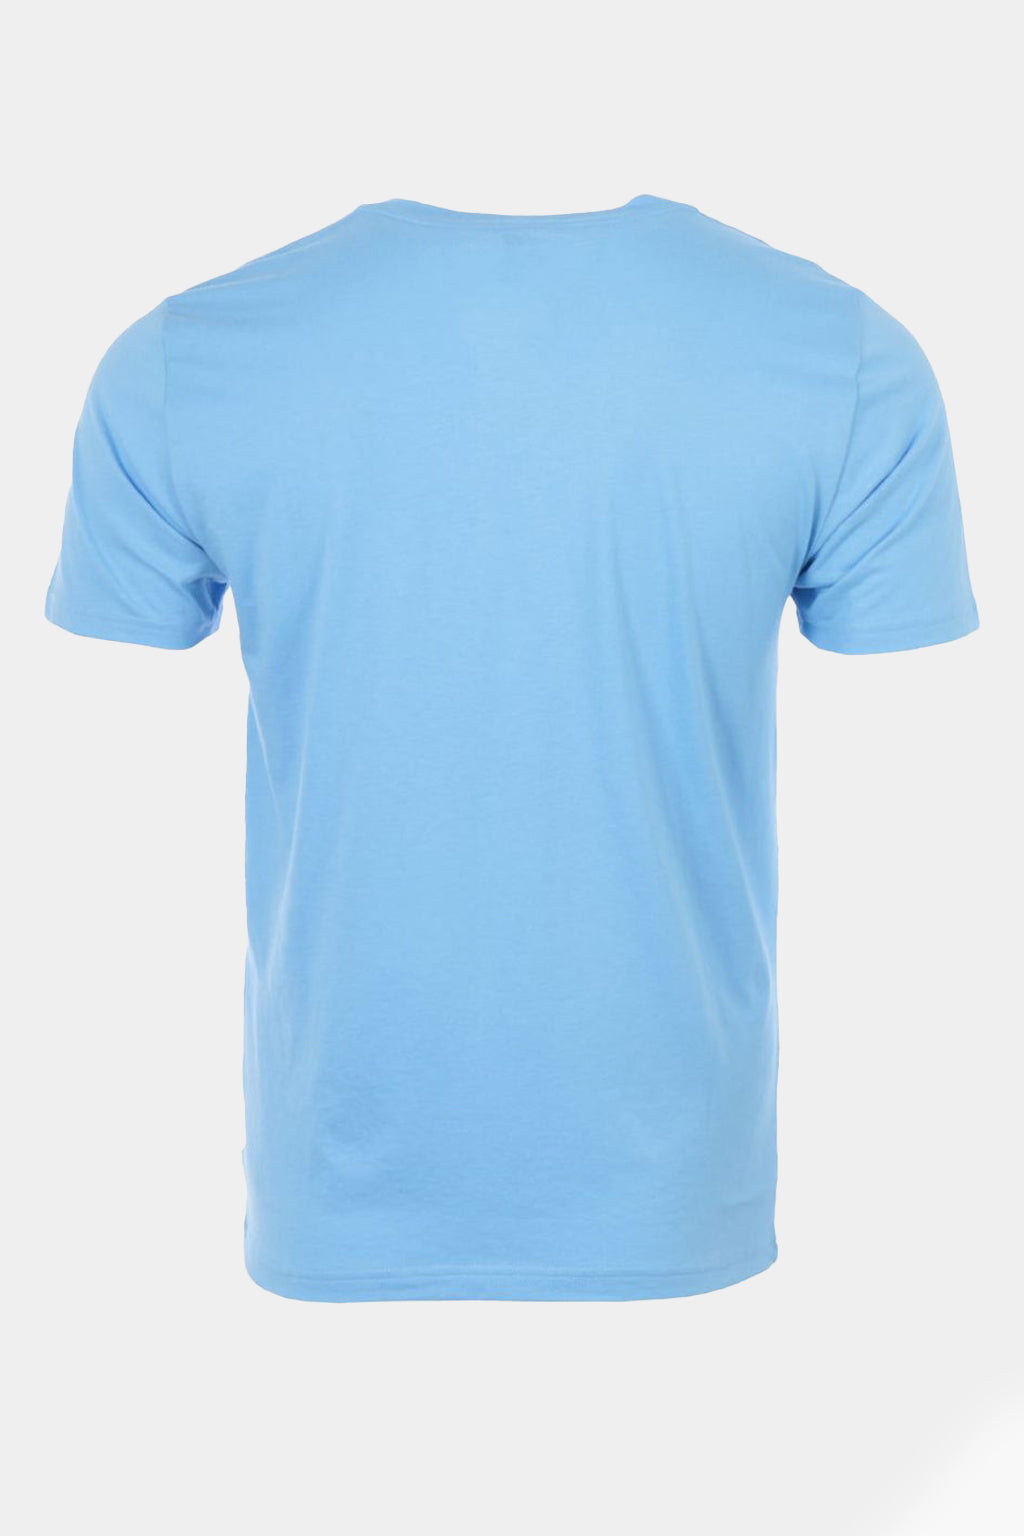 New Balance - Keyline T-Shirt